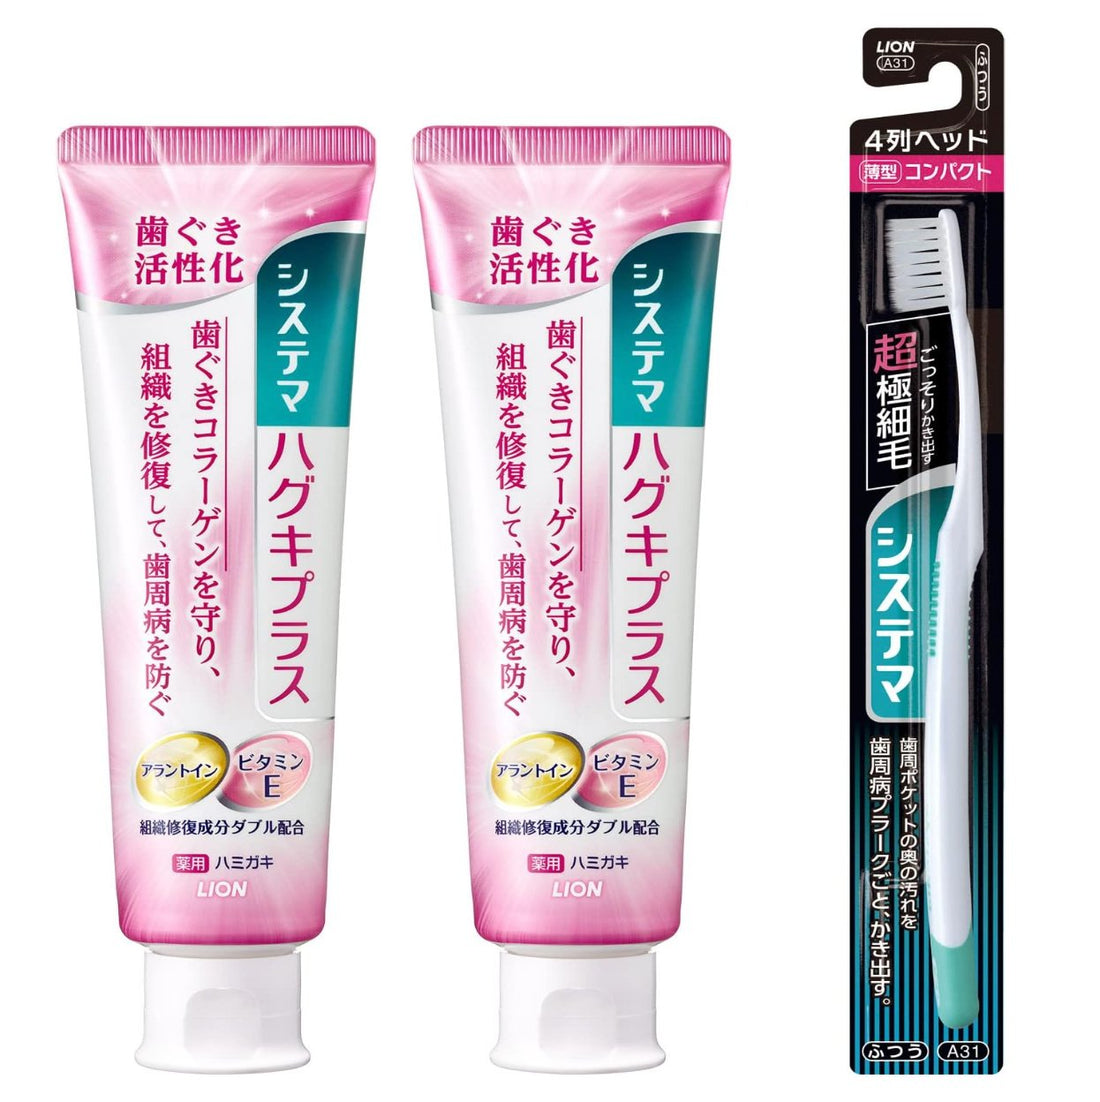 Systema Haguki Plus [Quasi-drug] Toothpaste, Toothpaste, Periodontal Disease, Fluorine, 90g x 2 + Toothbrush Included - NihonMura